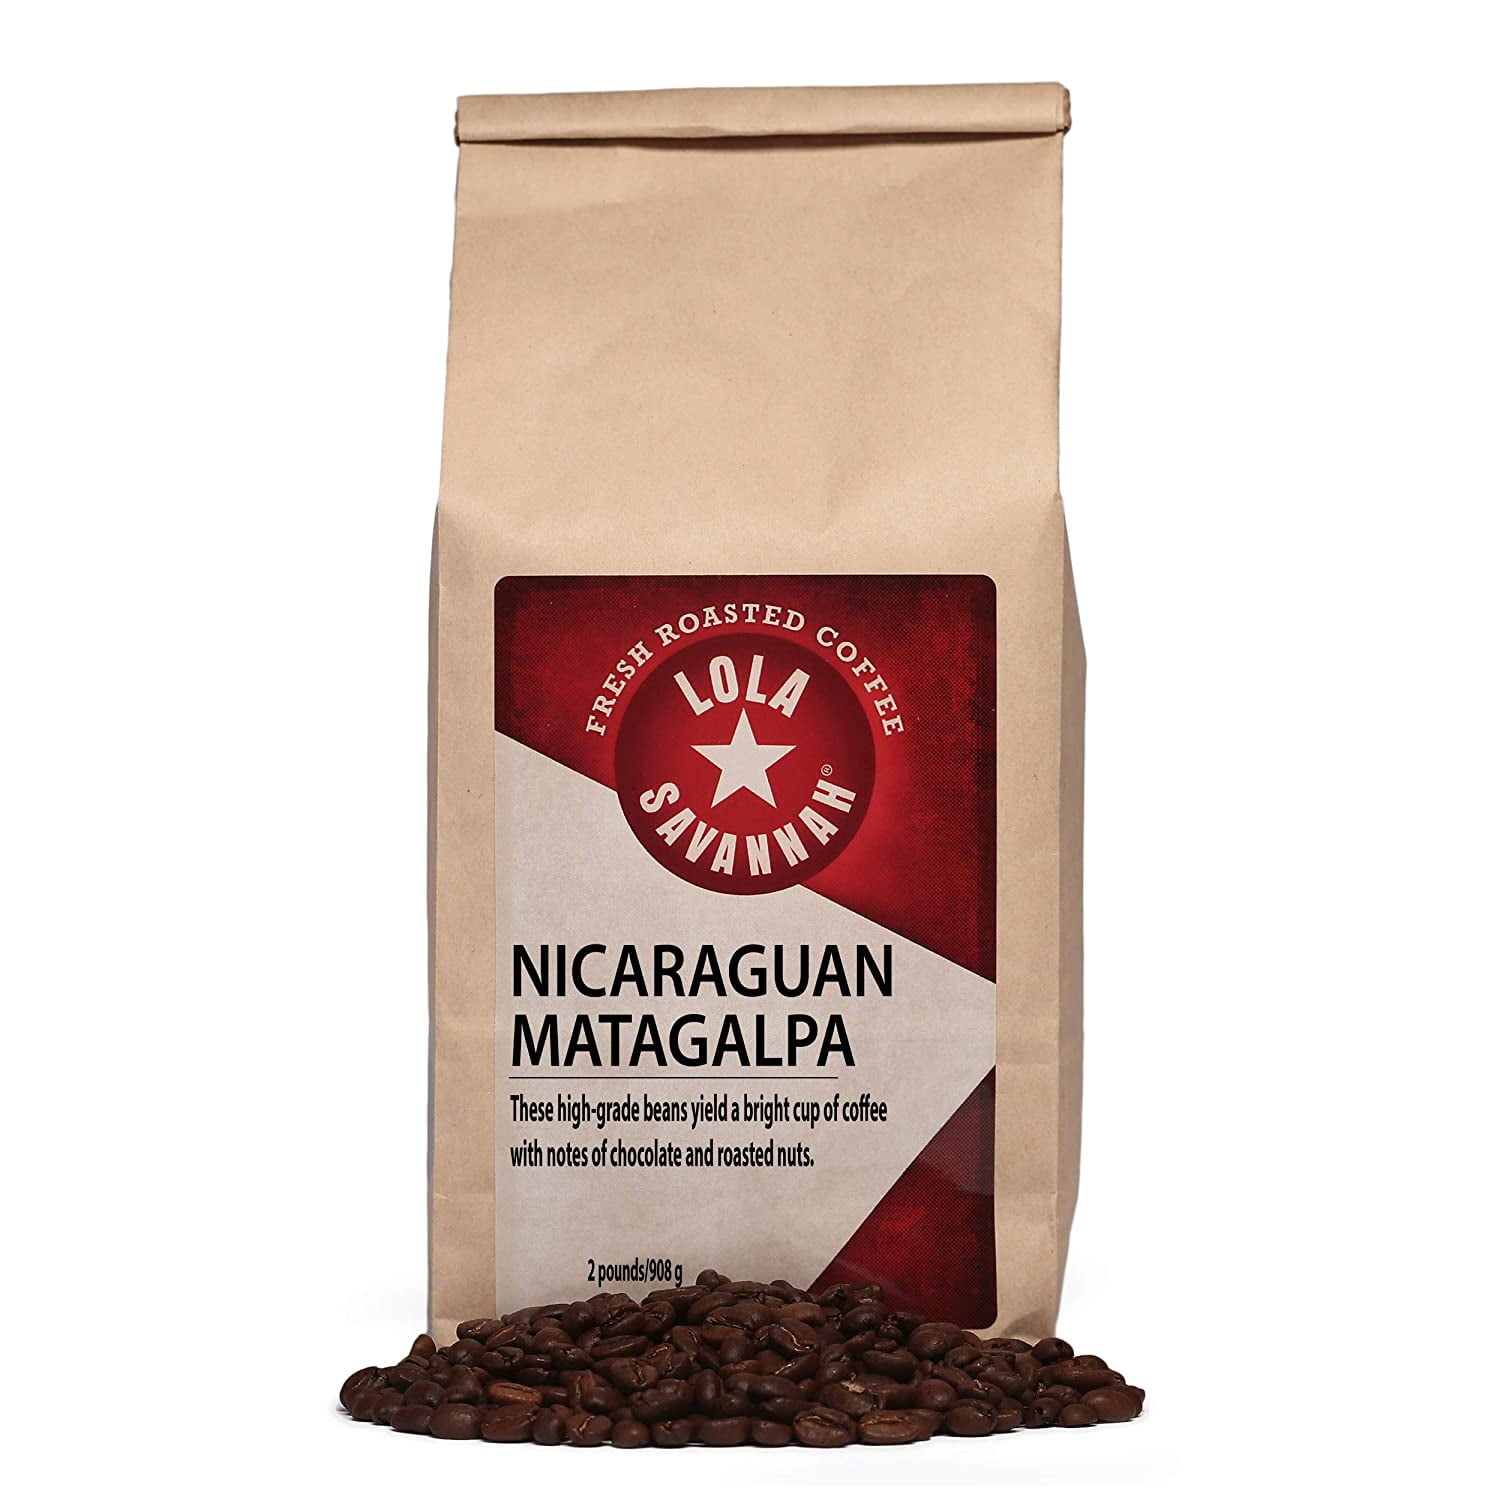 Lola Savannah Nicaraguan Matagalpa Whole Bean Coffee A